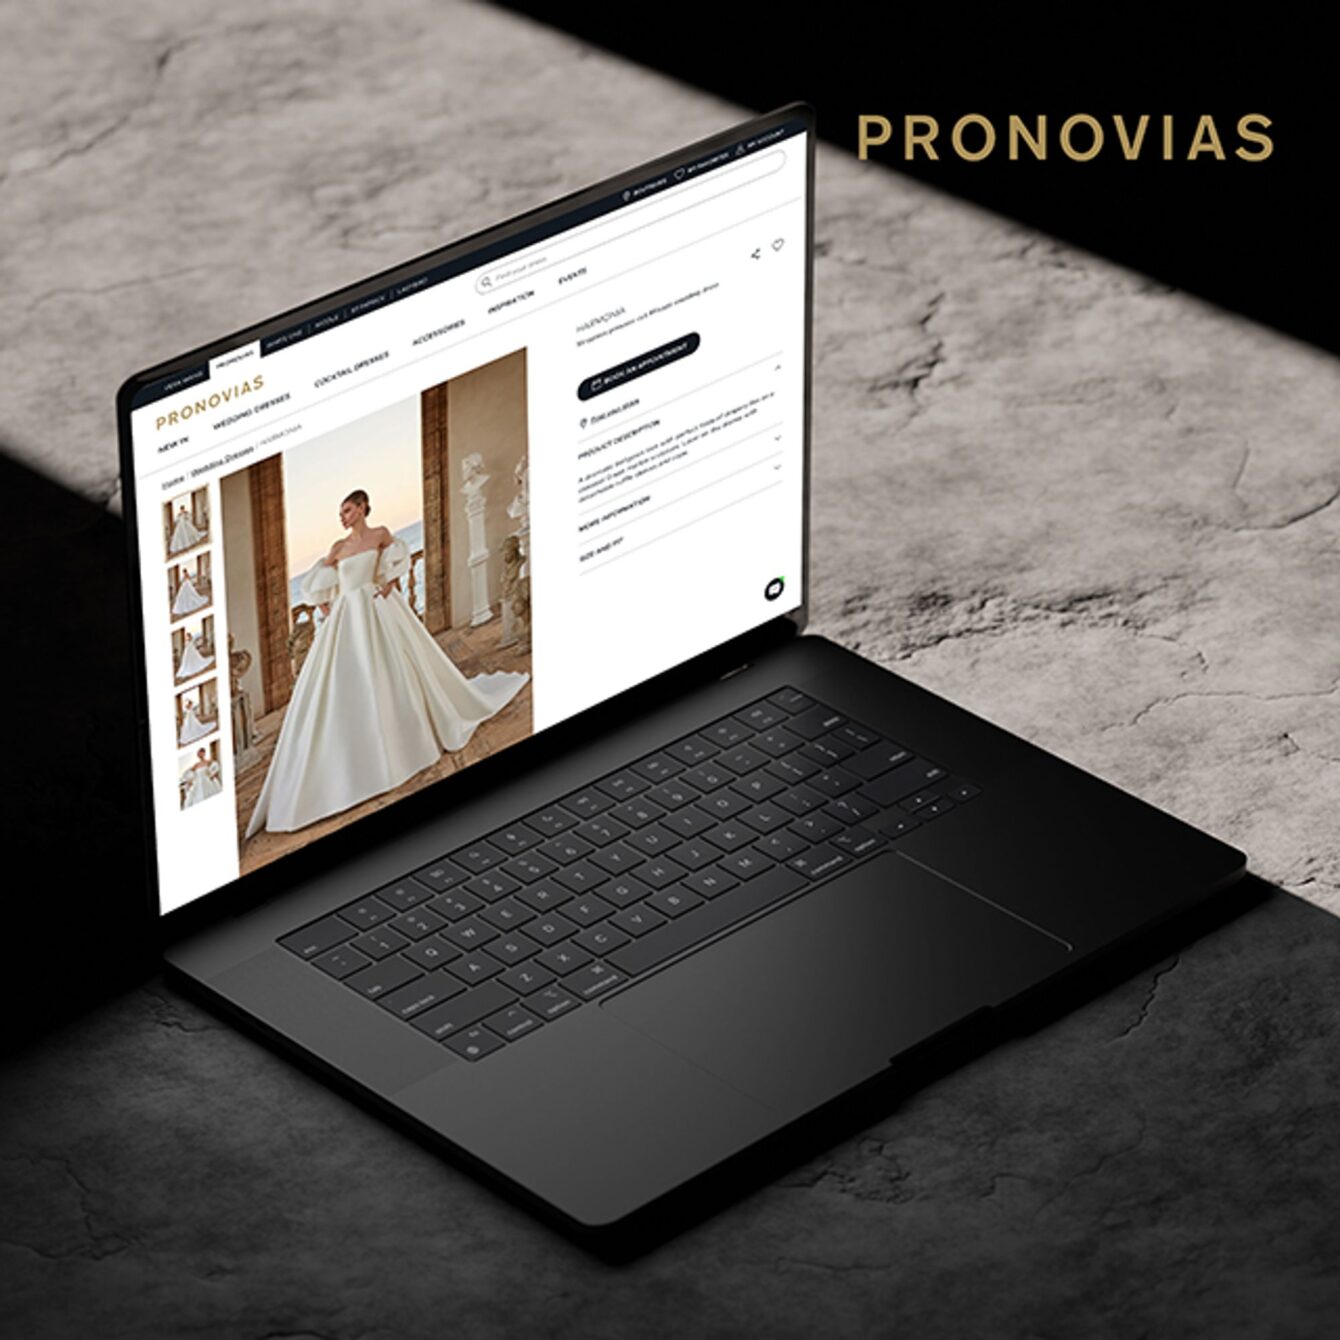 Pronovias website in a computer